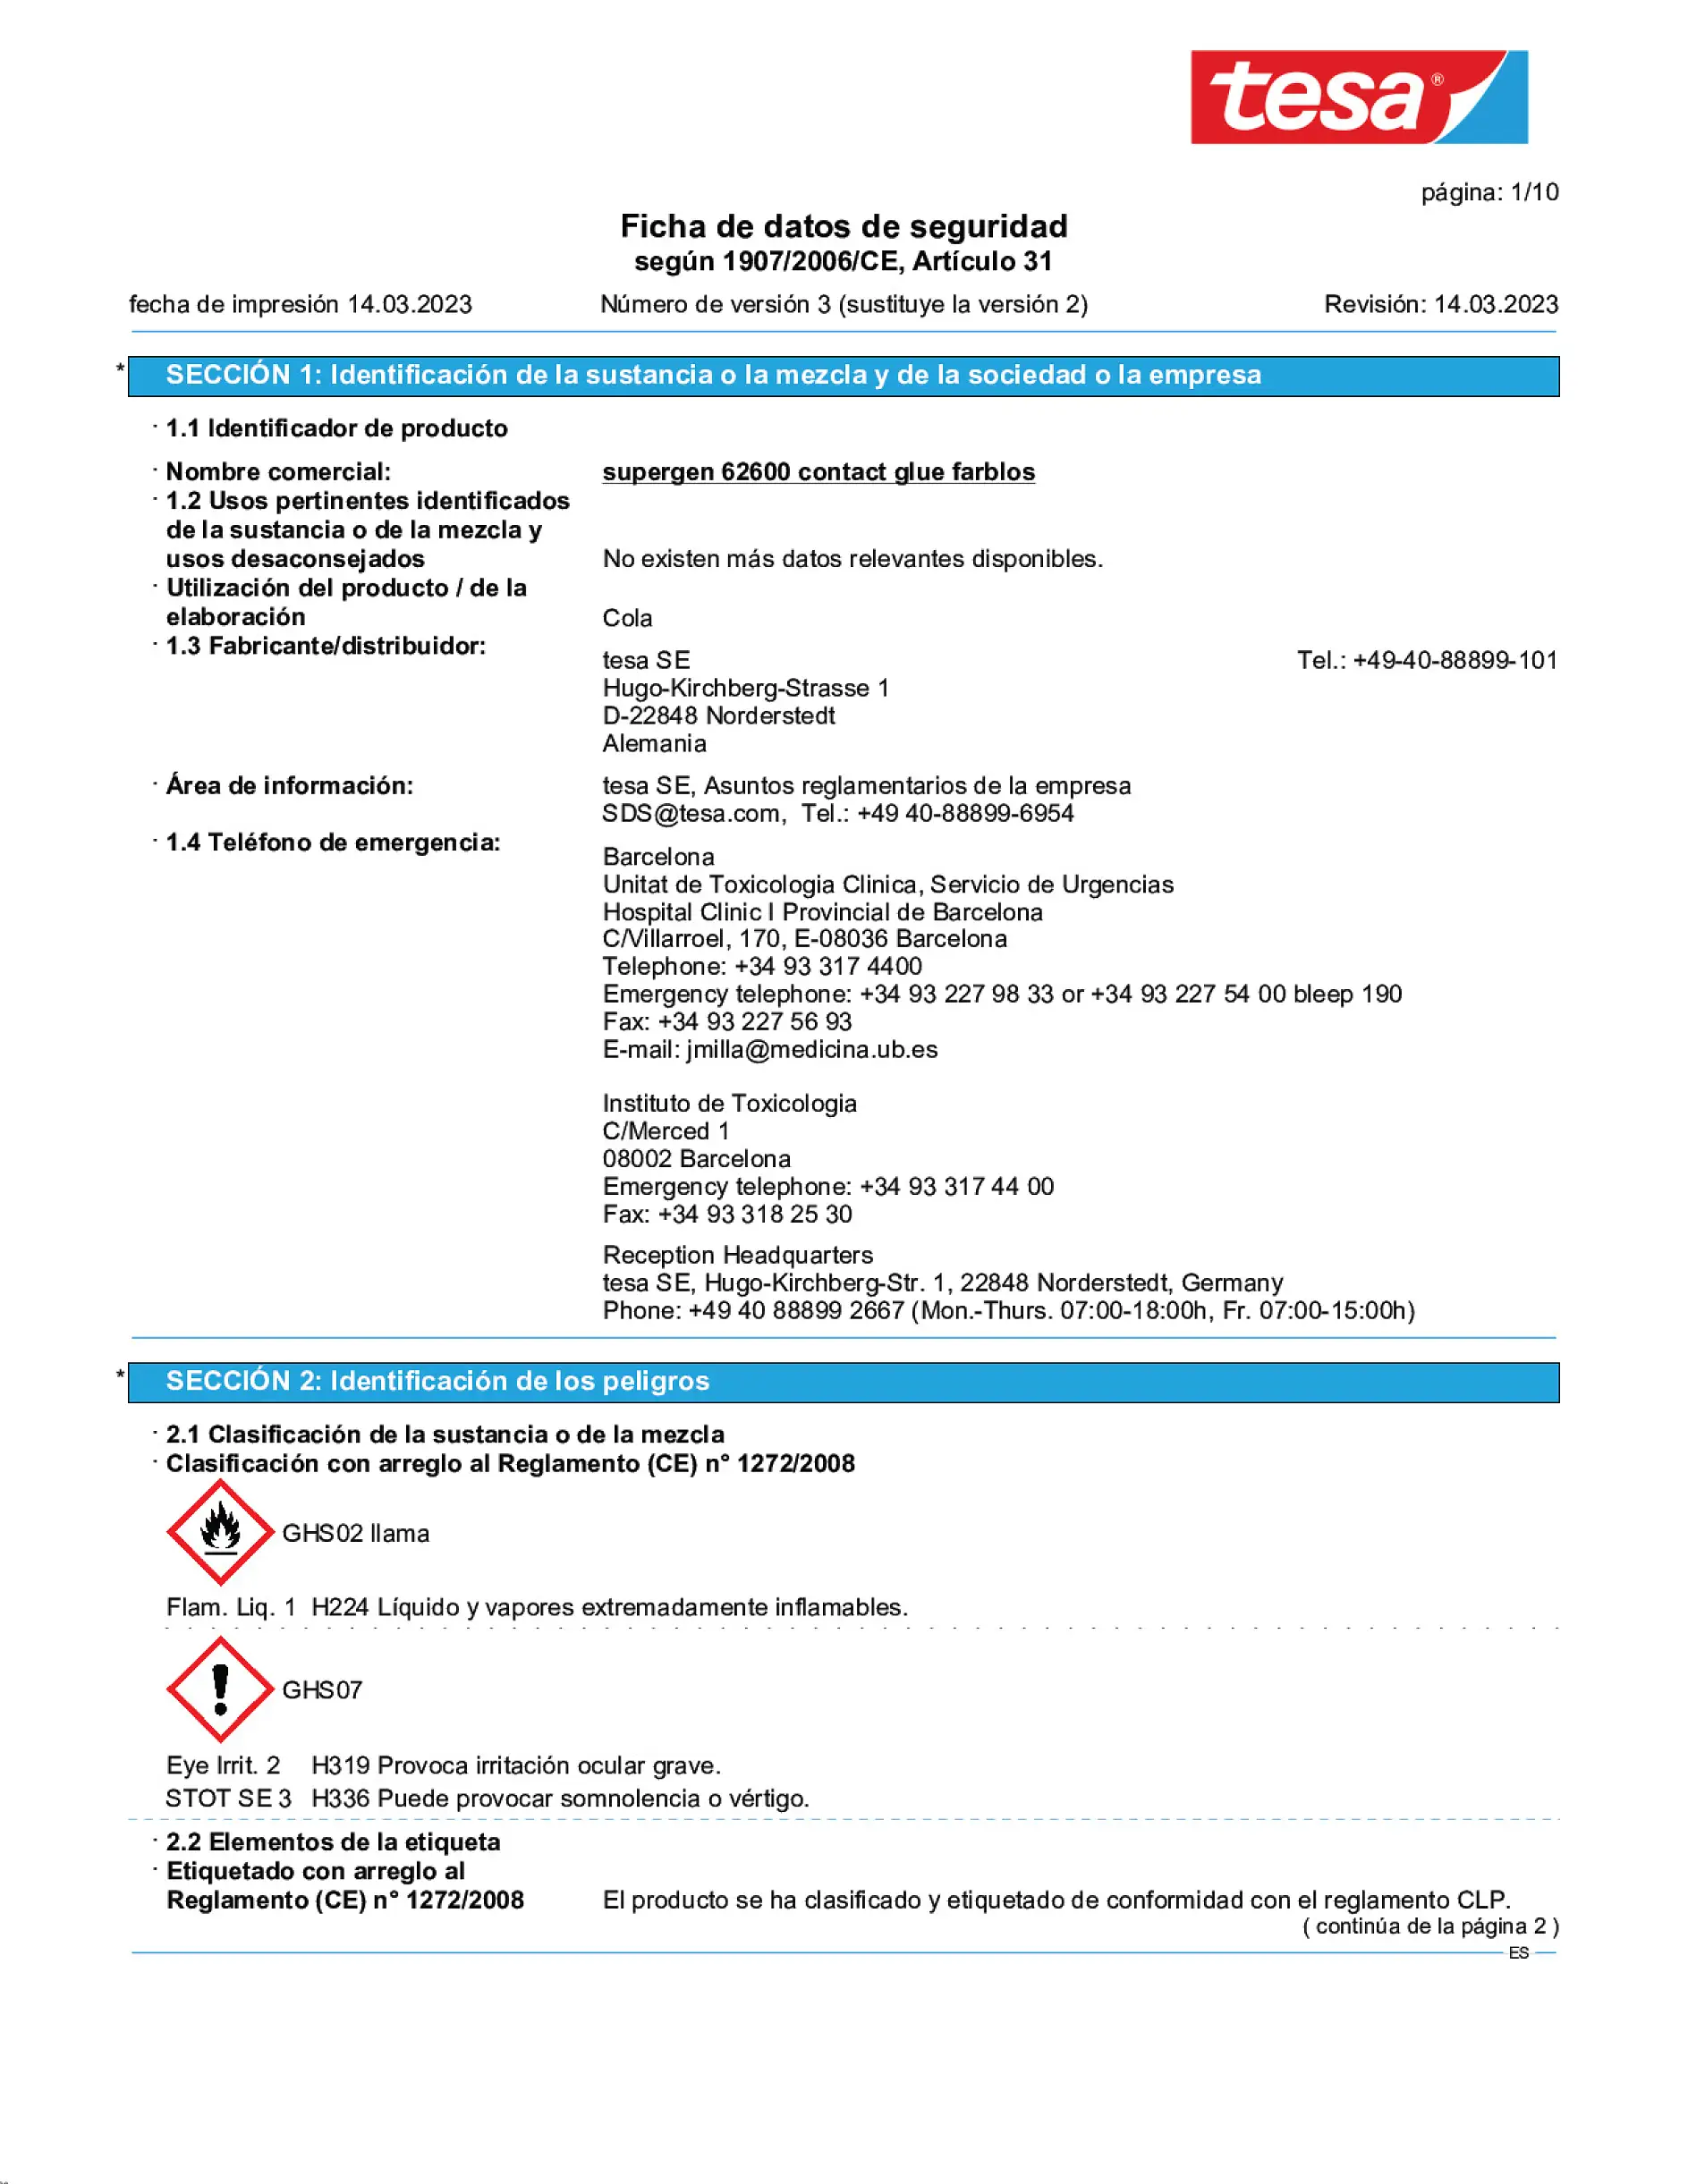 Safety data sheet_Supergen® 62600_es-ES_v3